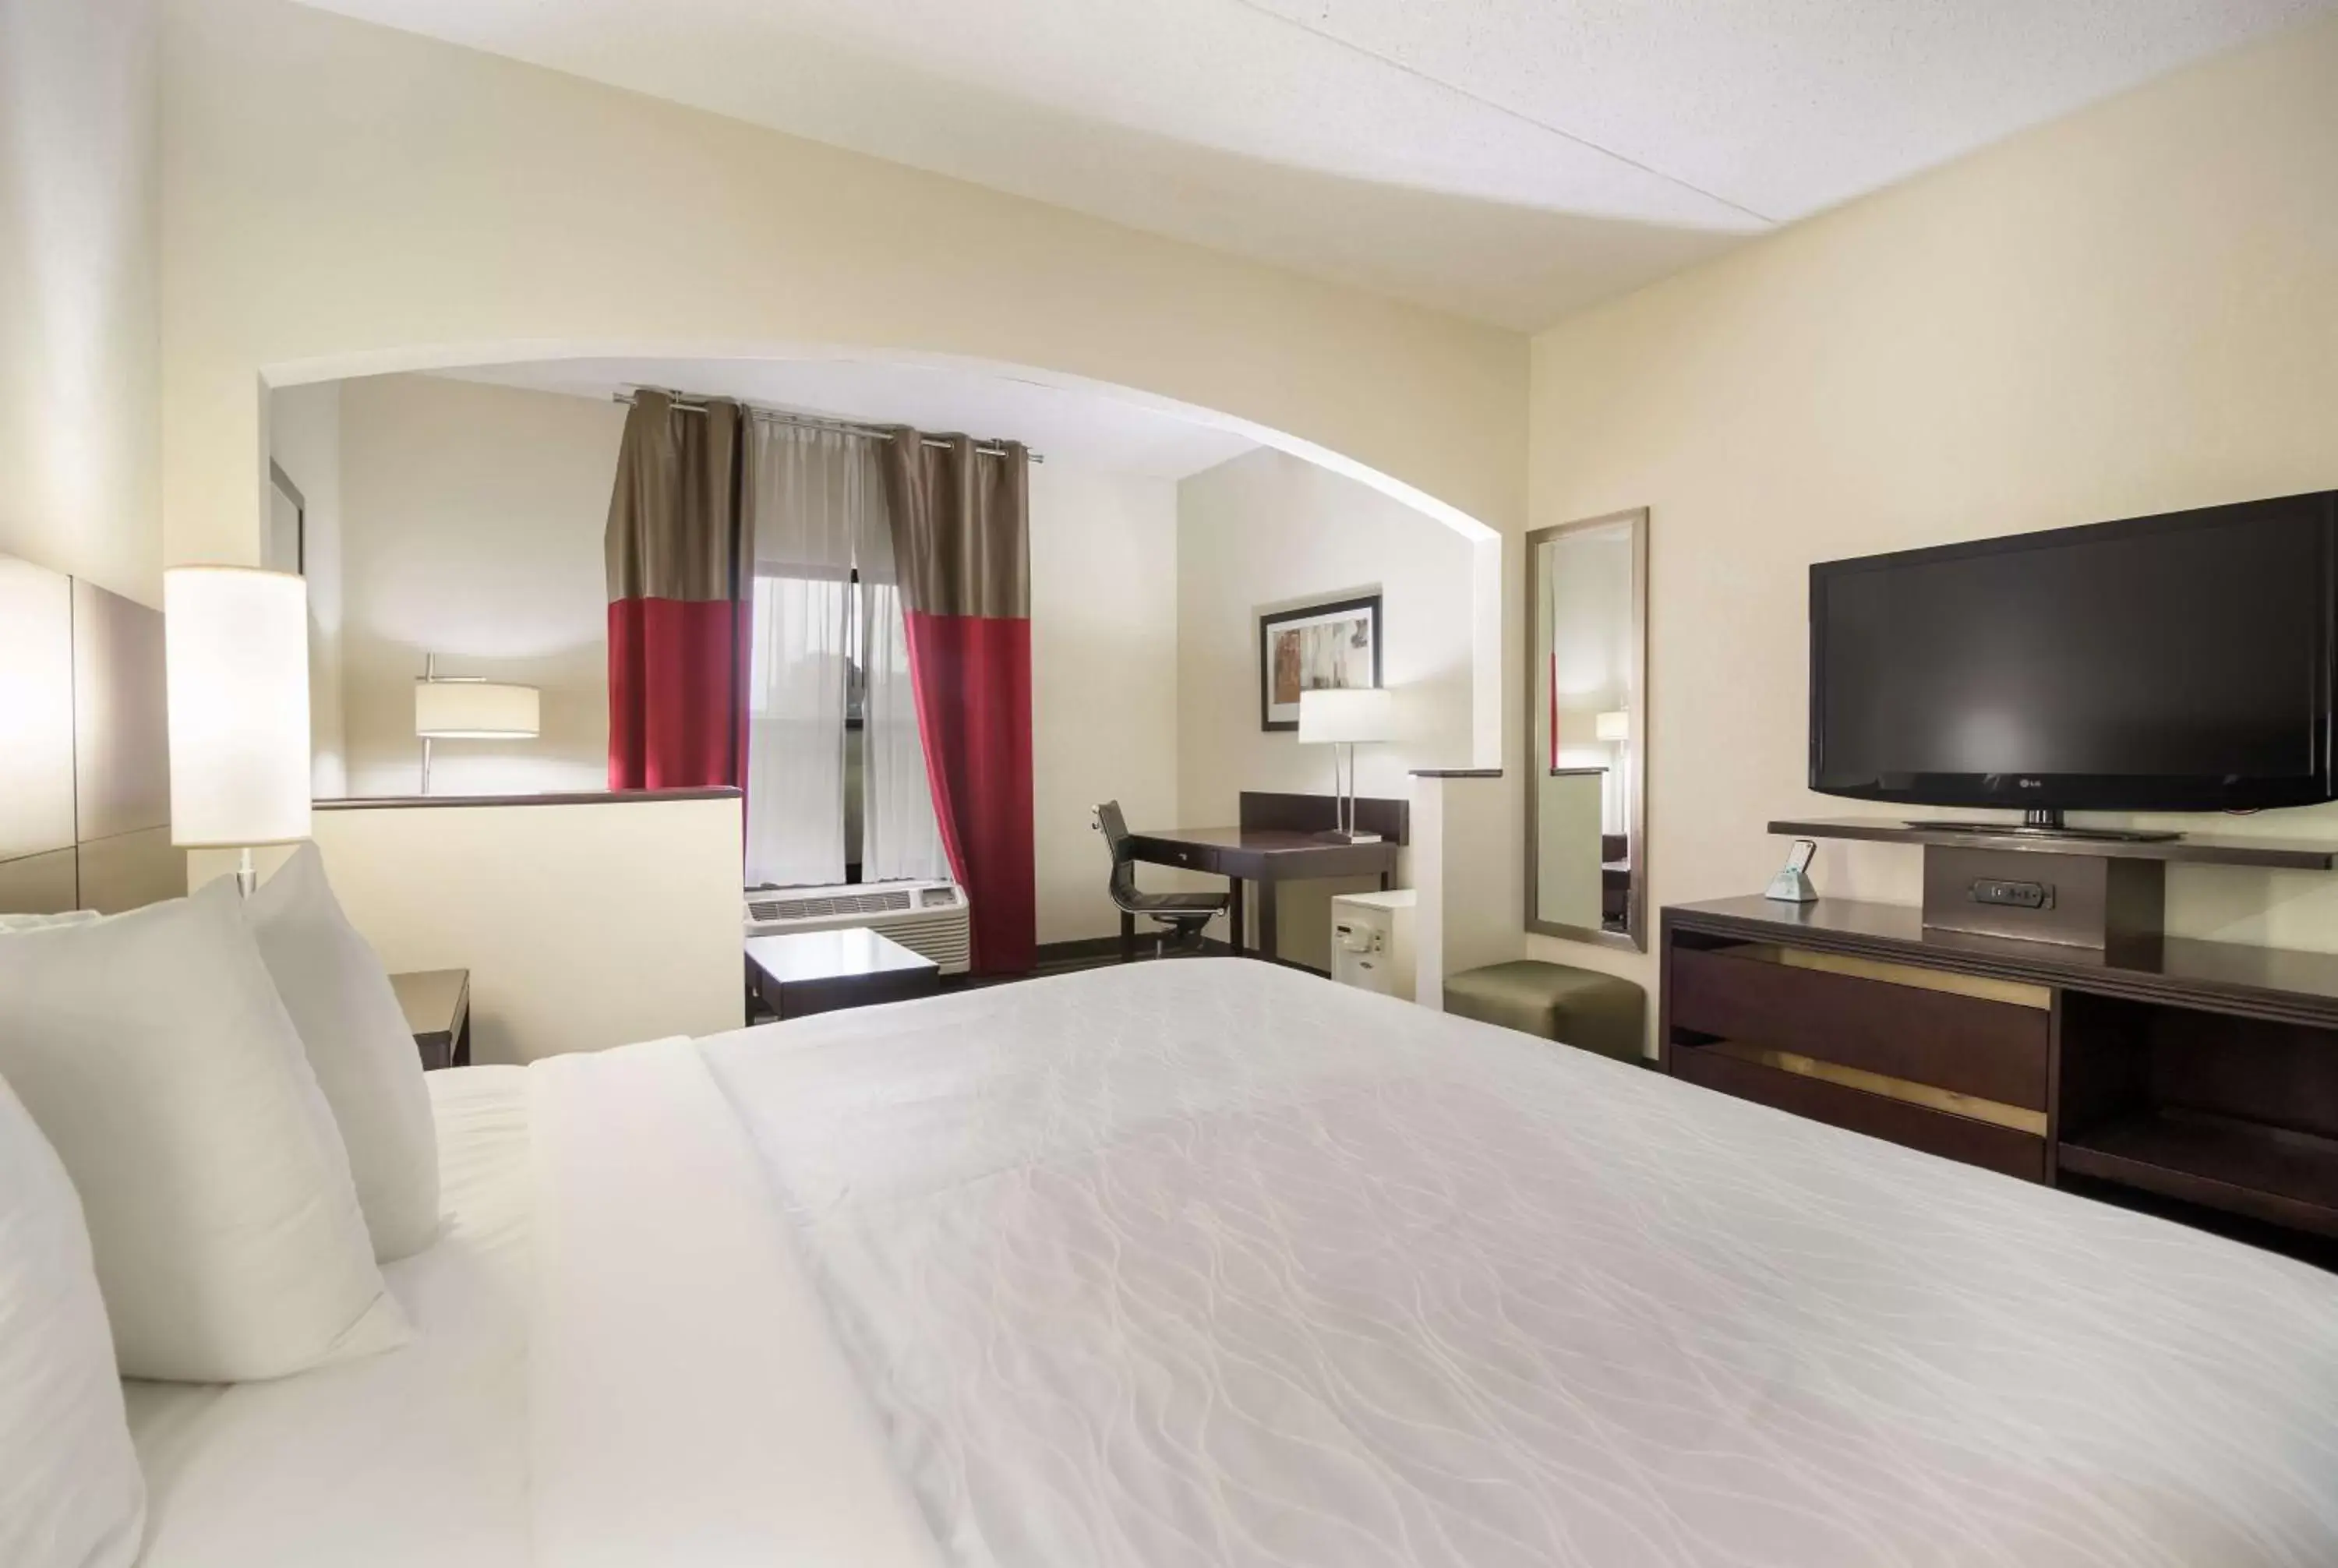 Bedroom, TV/Entertainment Center in Best Western Suites near Opryland